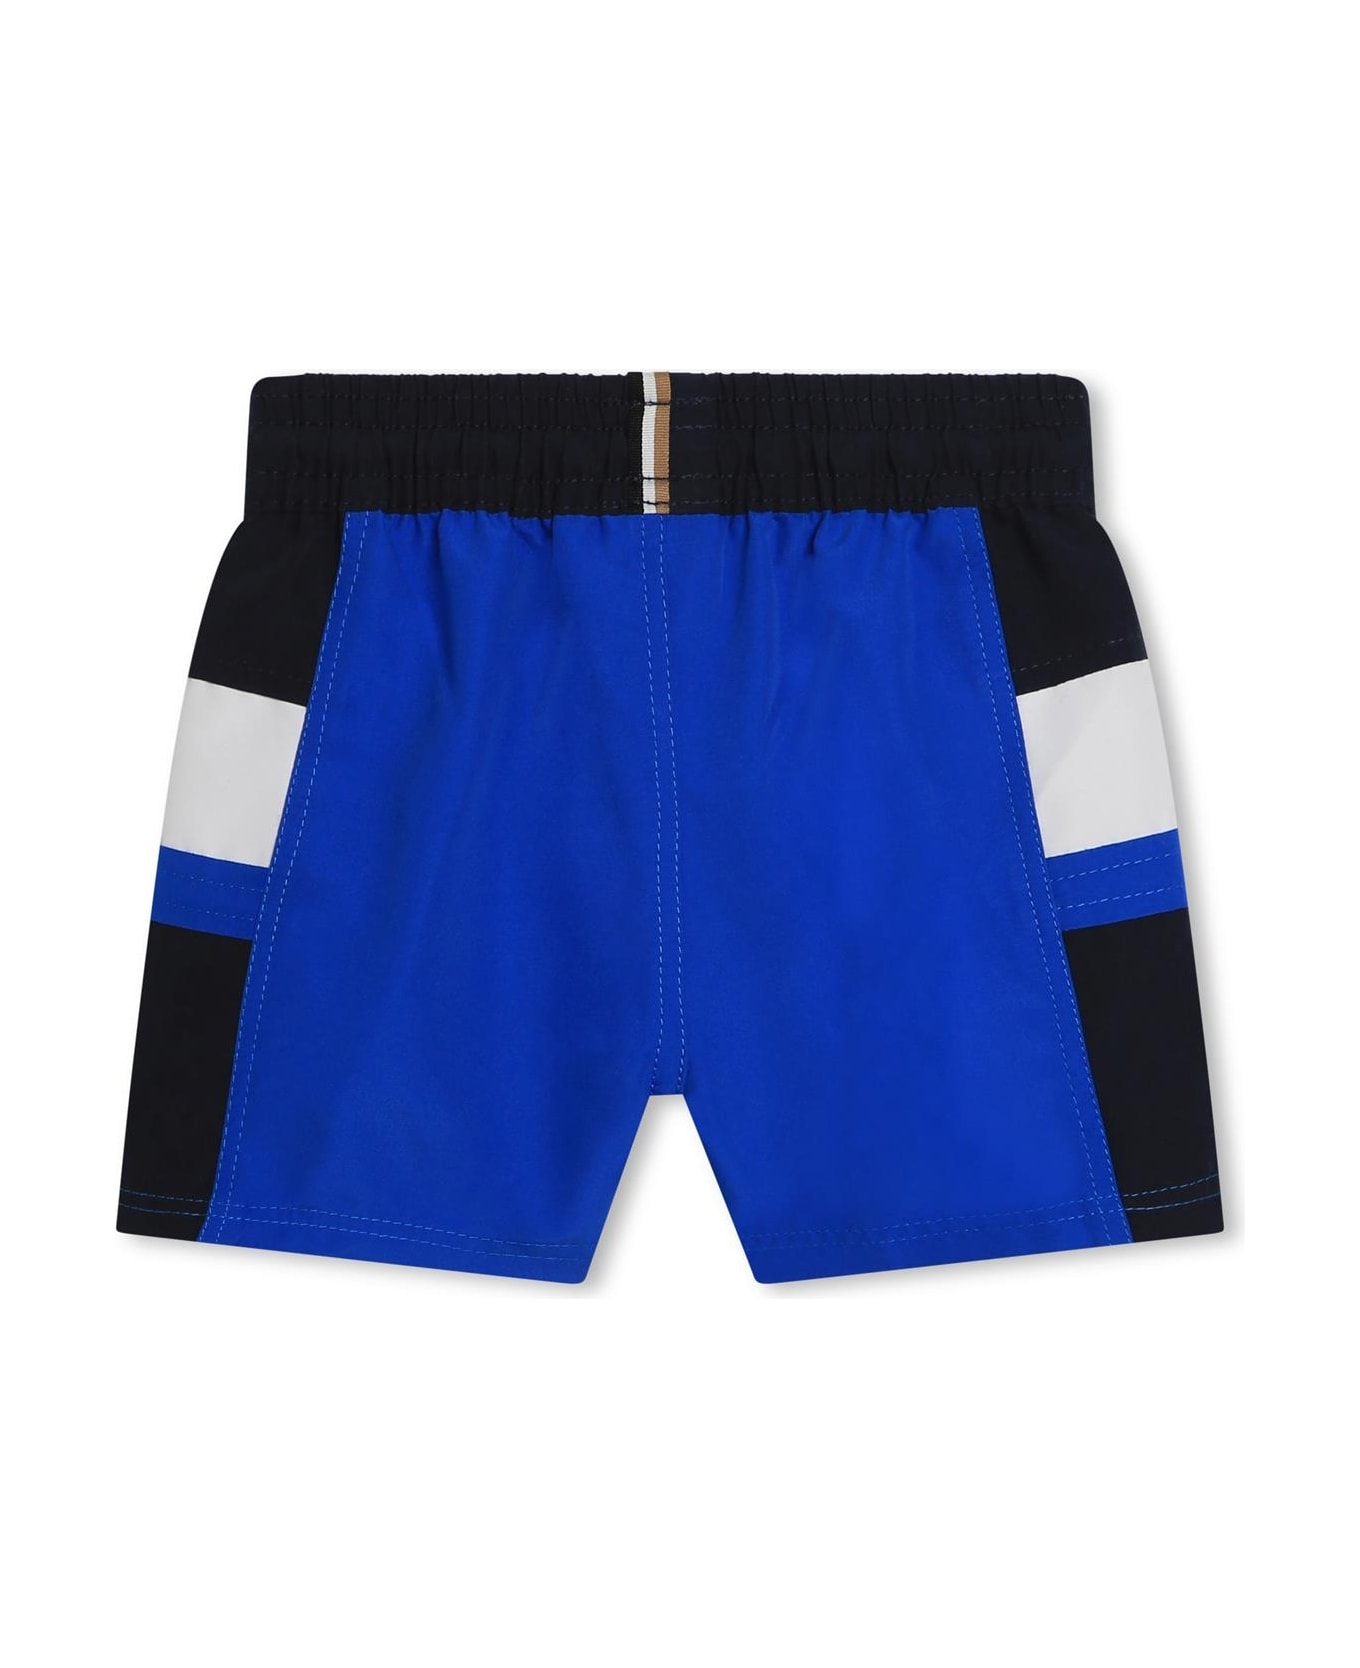 Hugo Boss Swimsuit With Color-block Design - Blue 水着